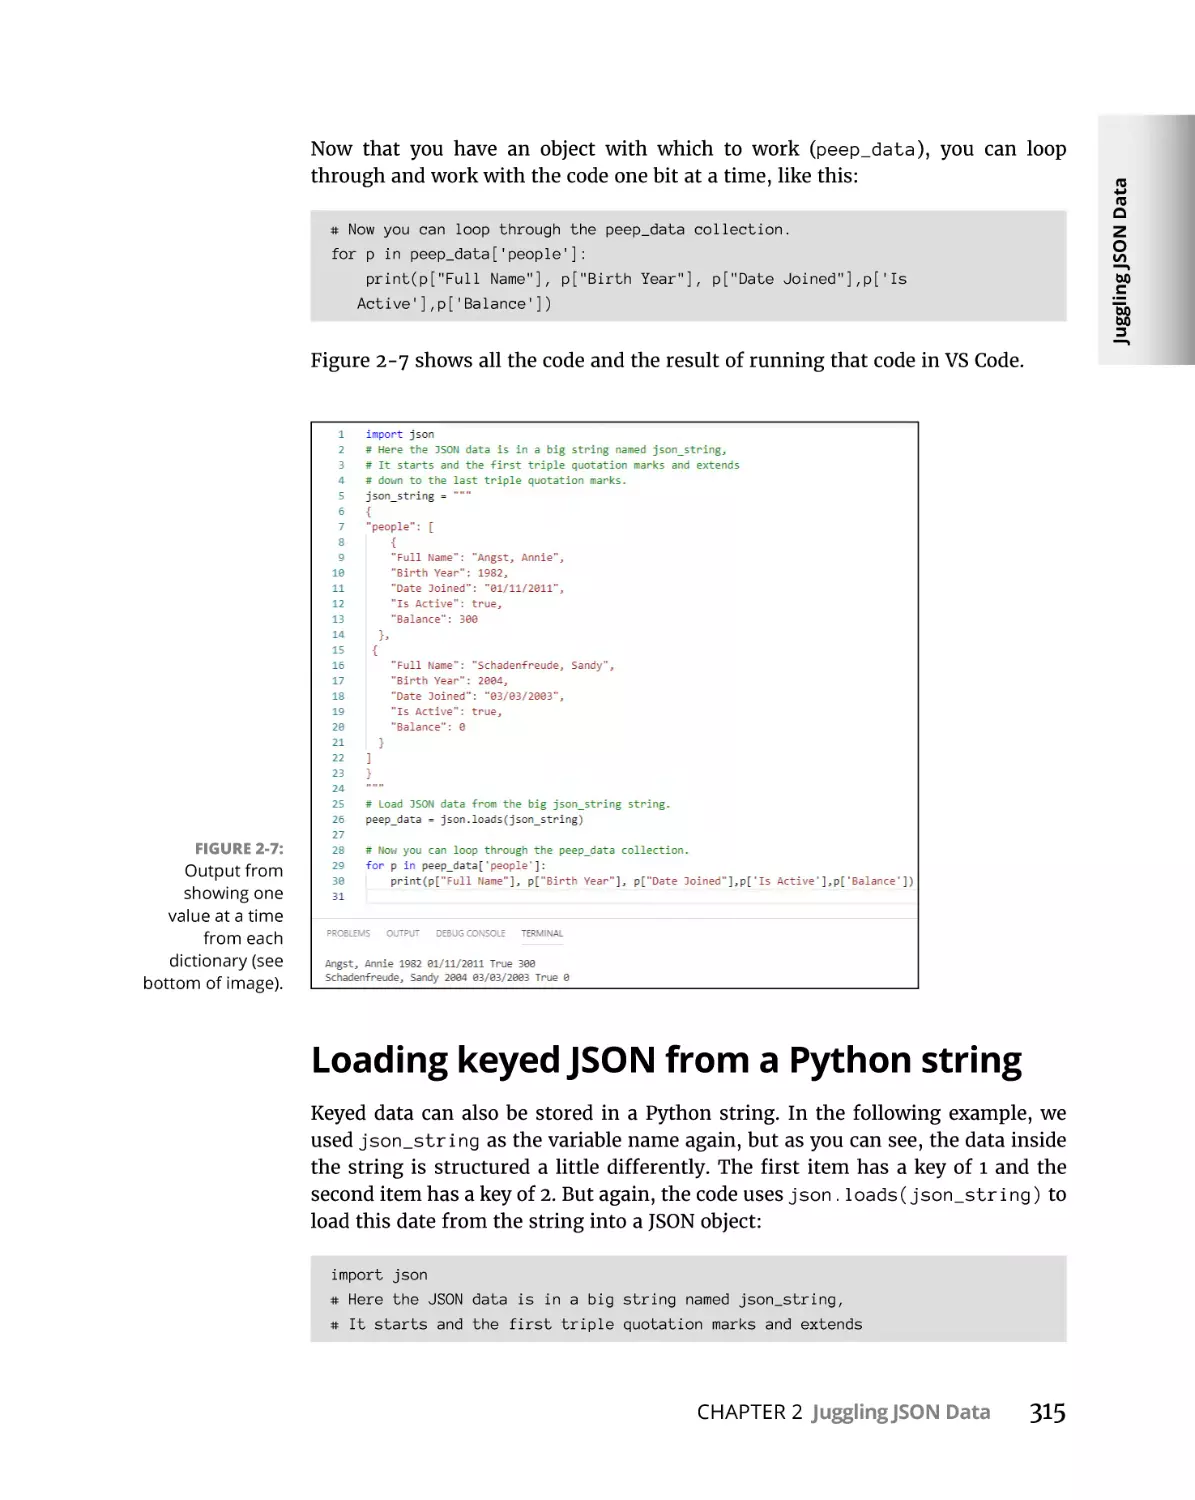 Loading keyed JSON from a Python string